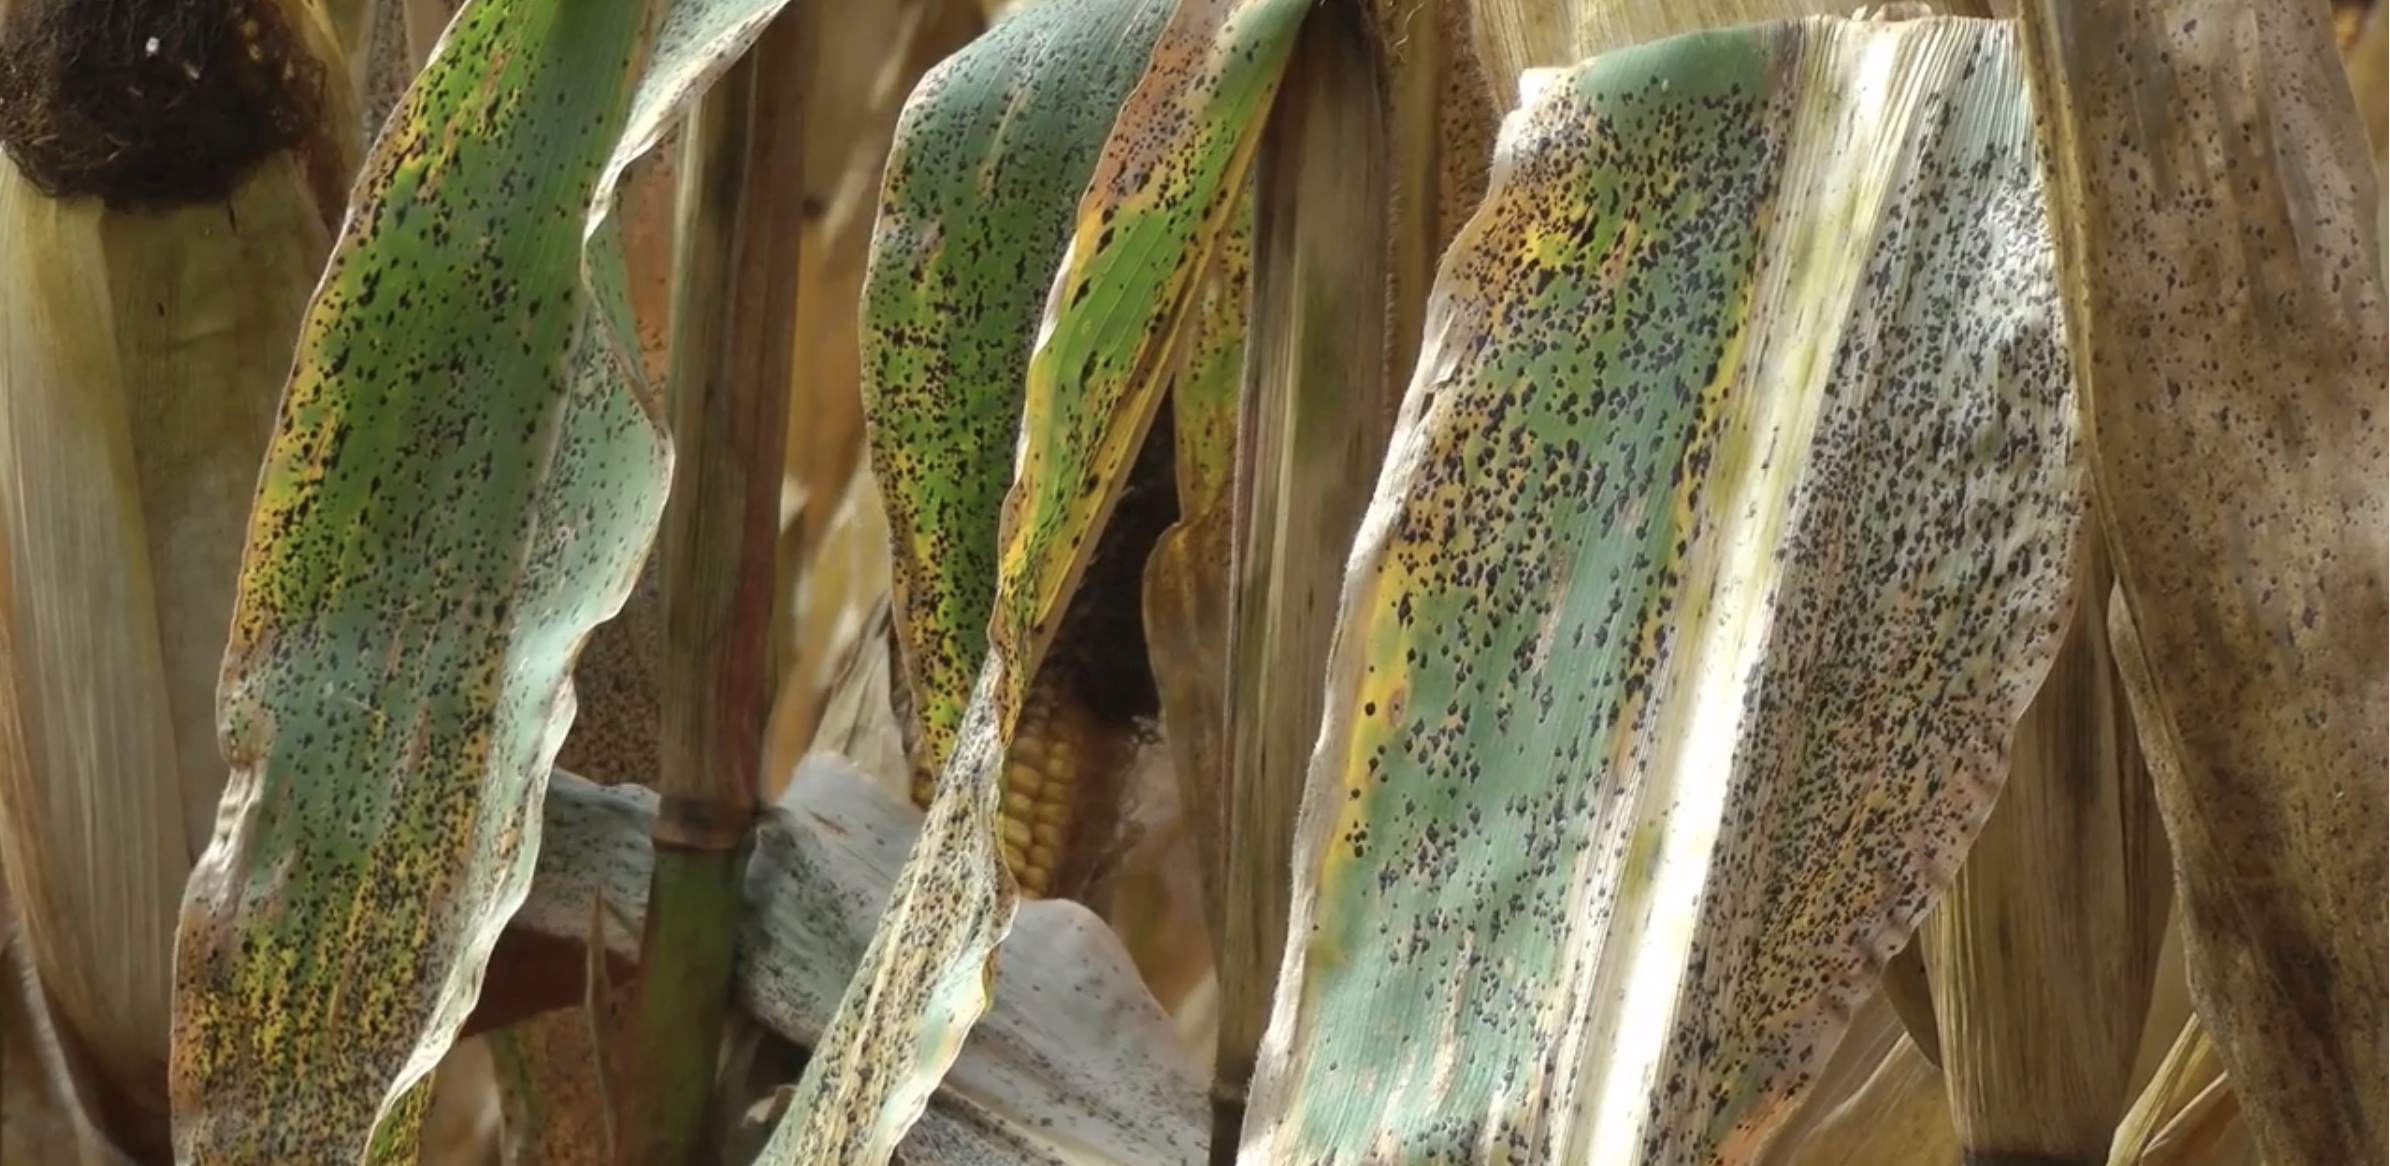 Tar spot disease on maize crops